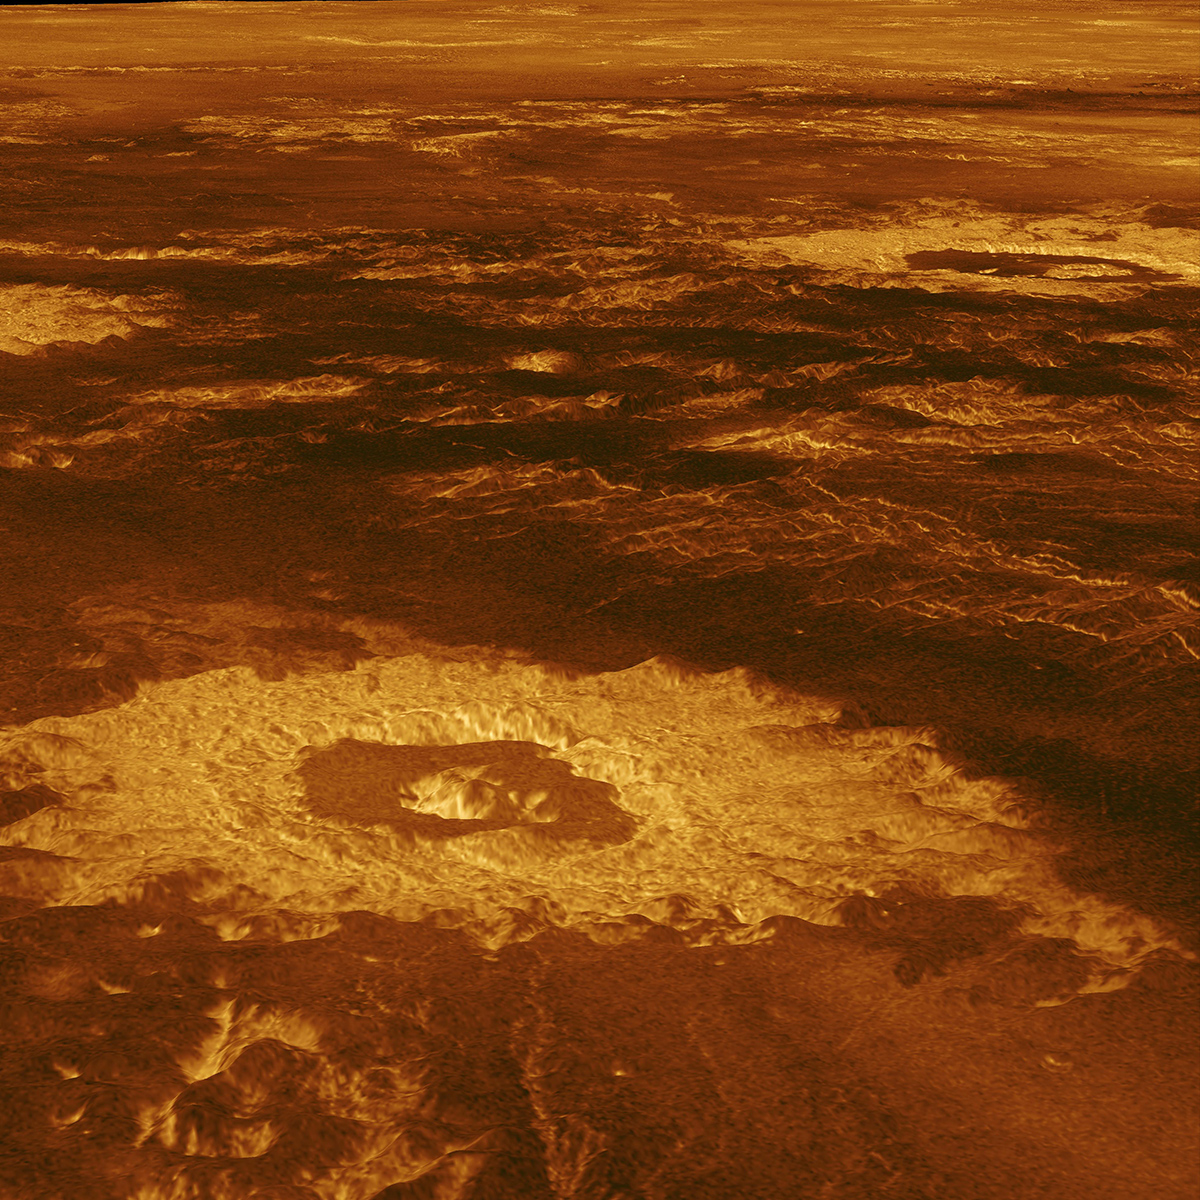 NASA Space Technology Three impression craters in Venus’ Lavinia Planitia